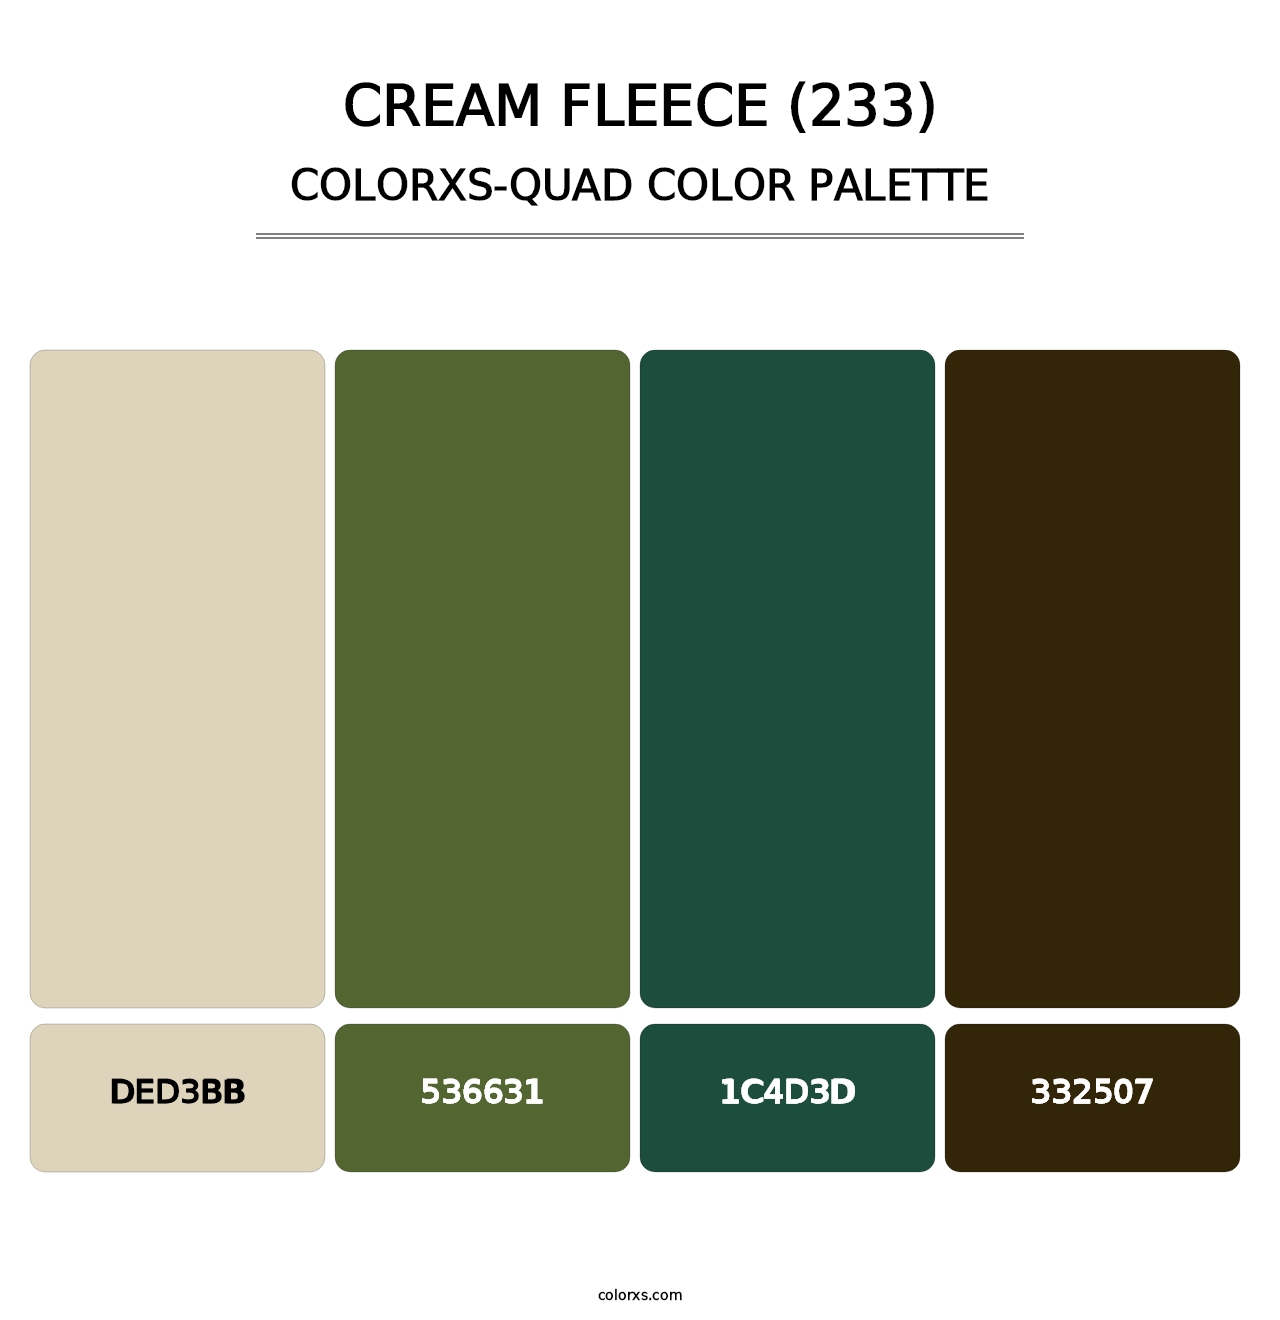 Cream Fleece (233) - Colorxs Quad Palette